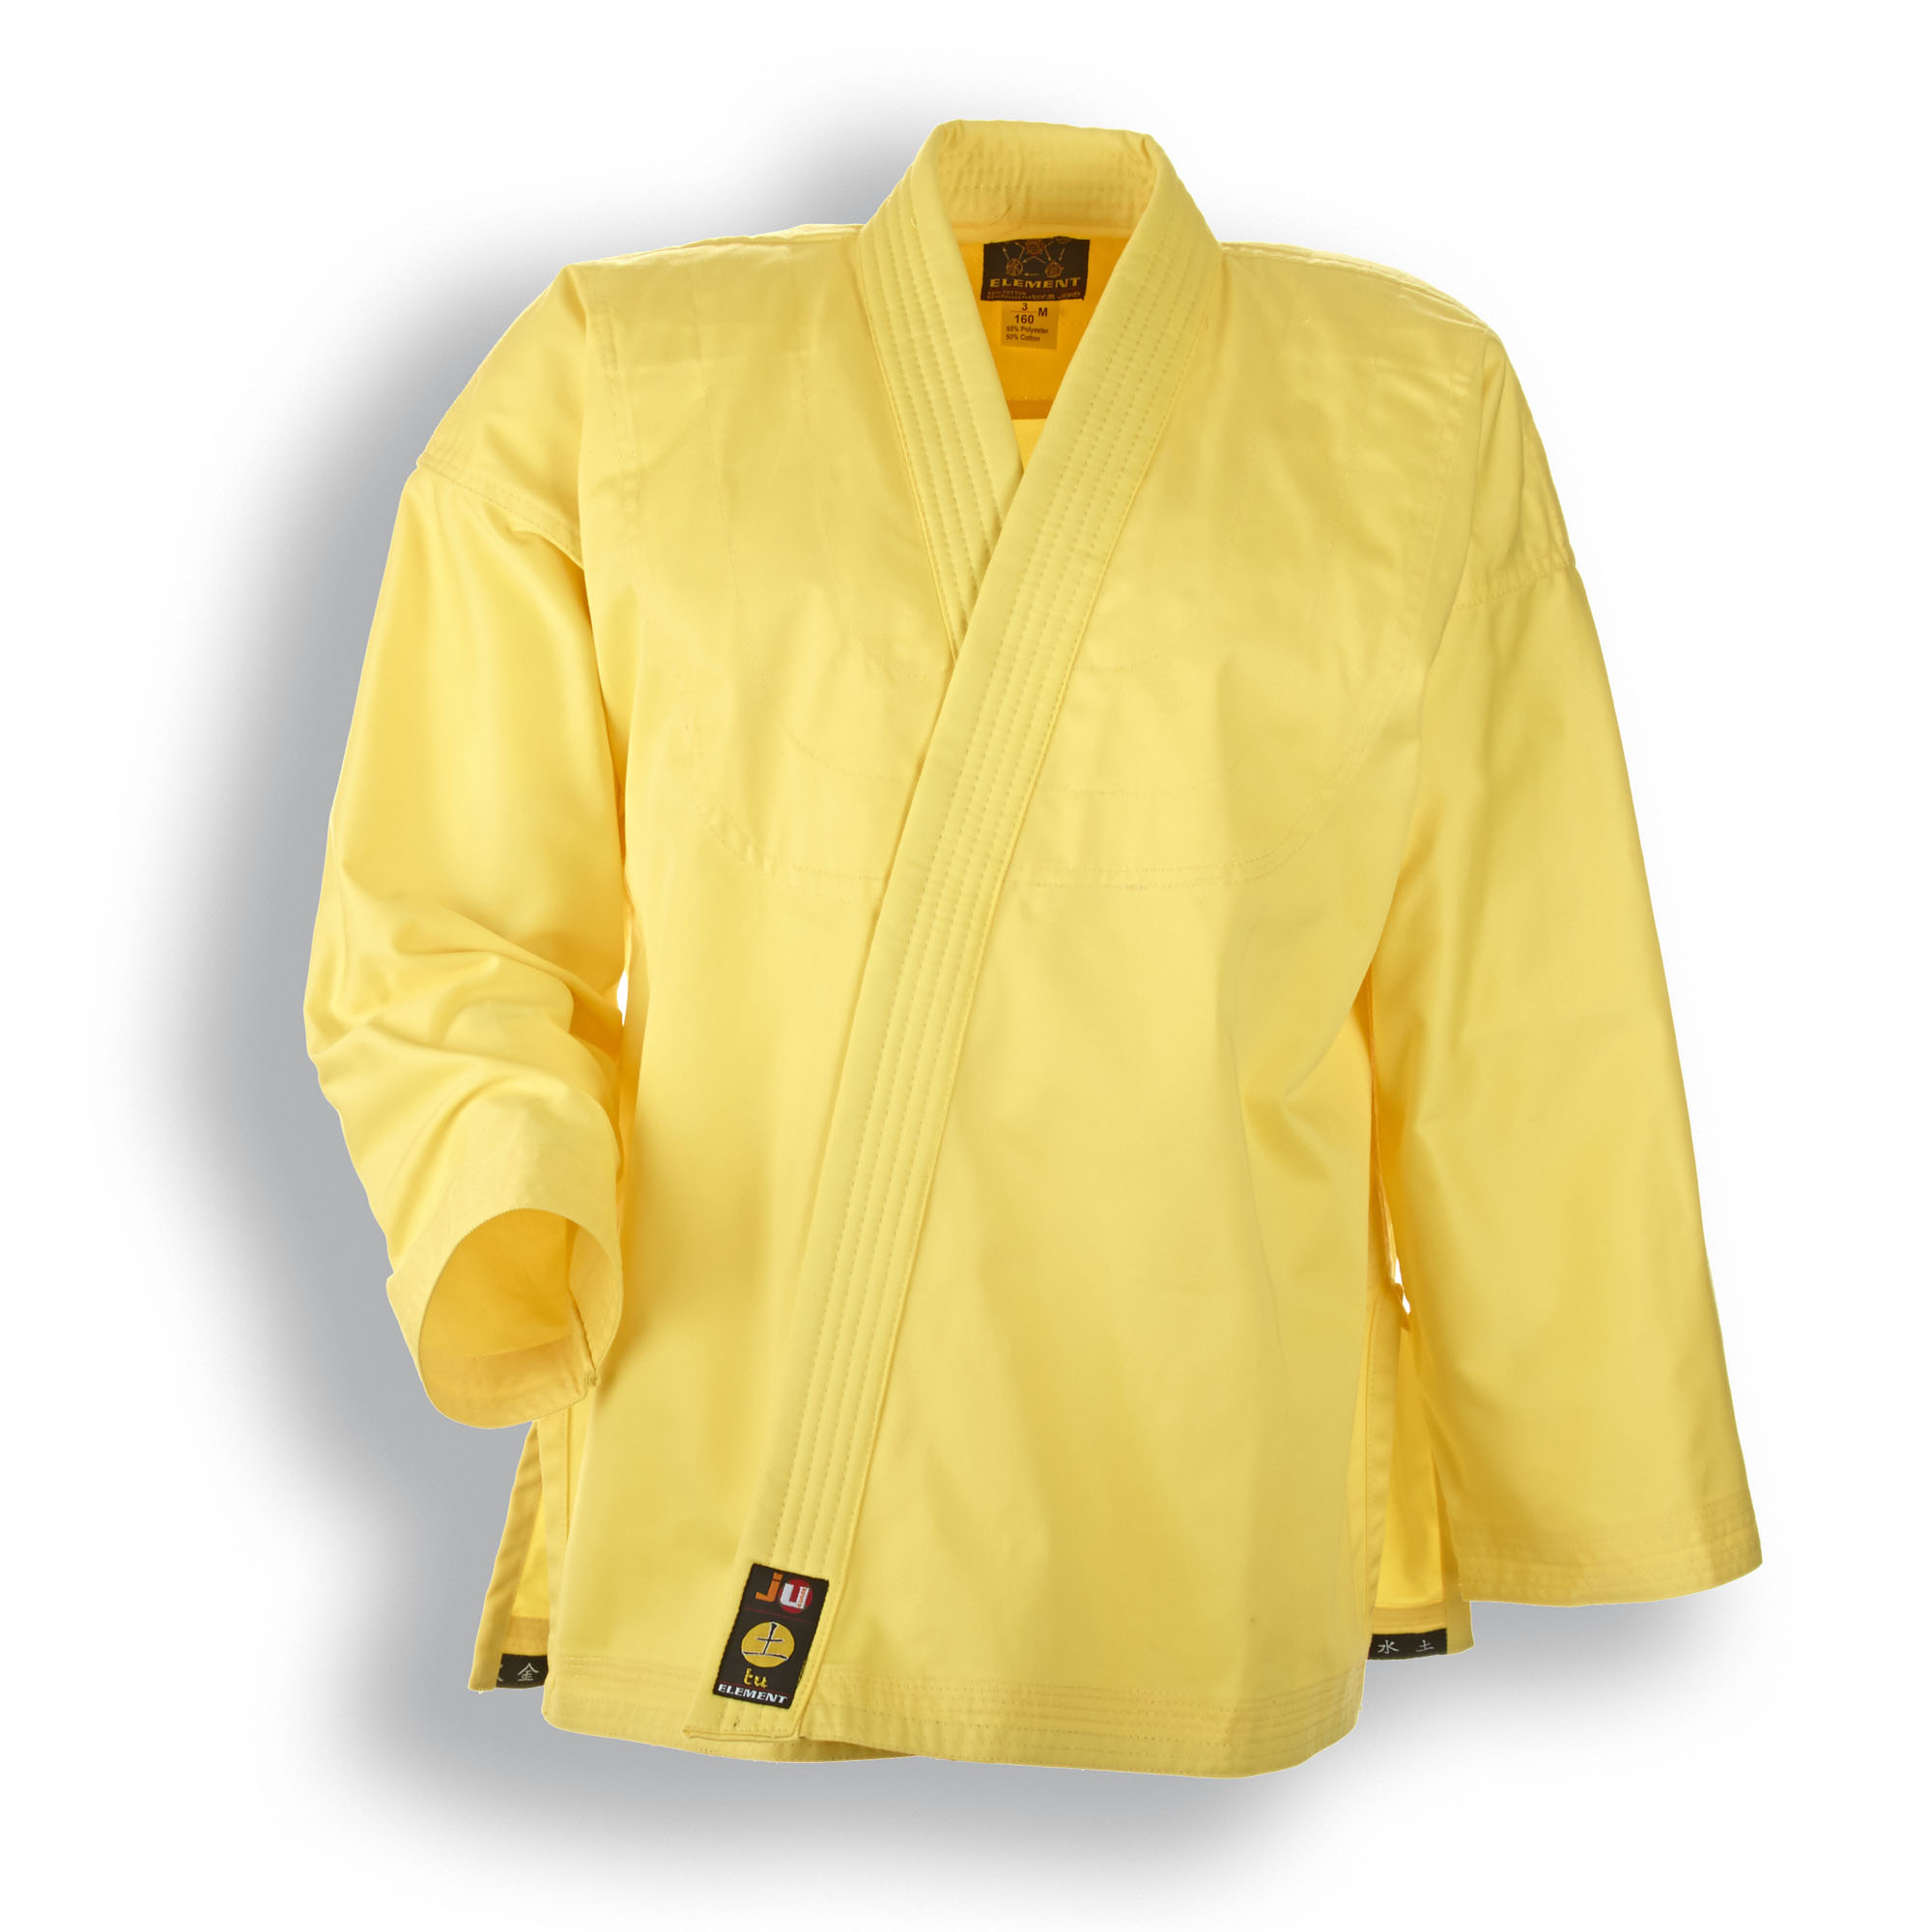 Element Gi Jacket yellow regular cut